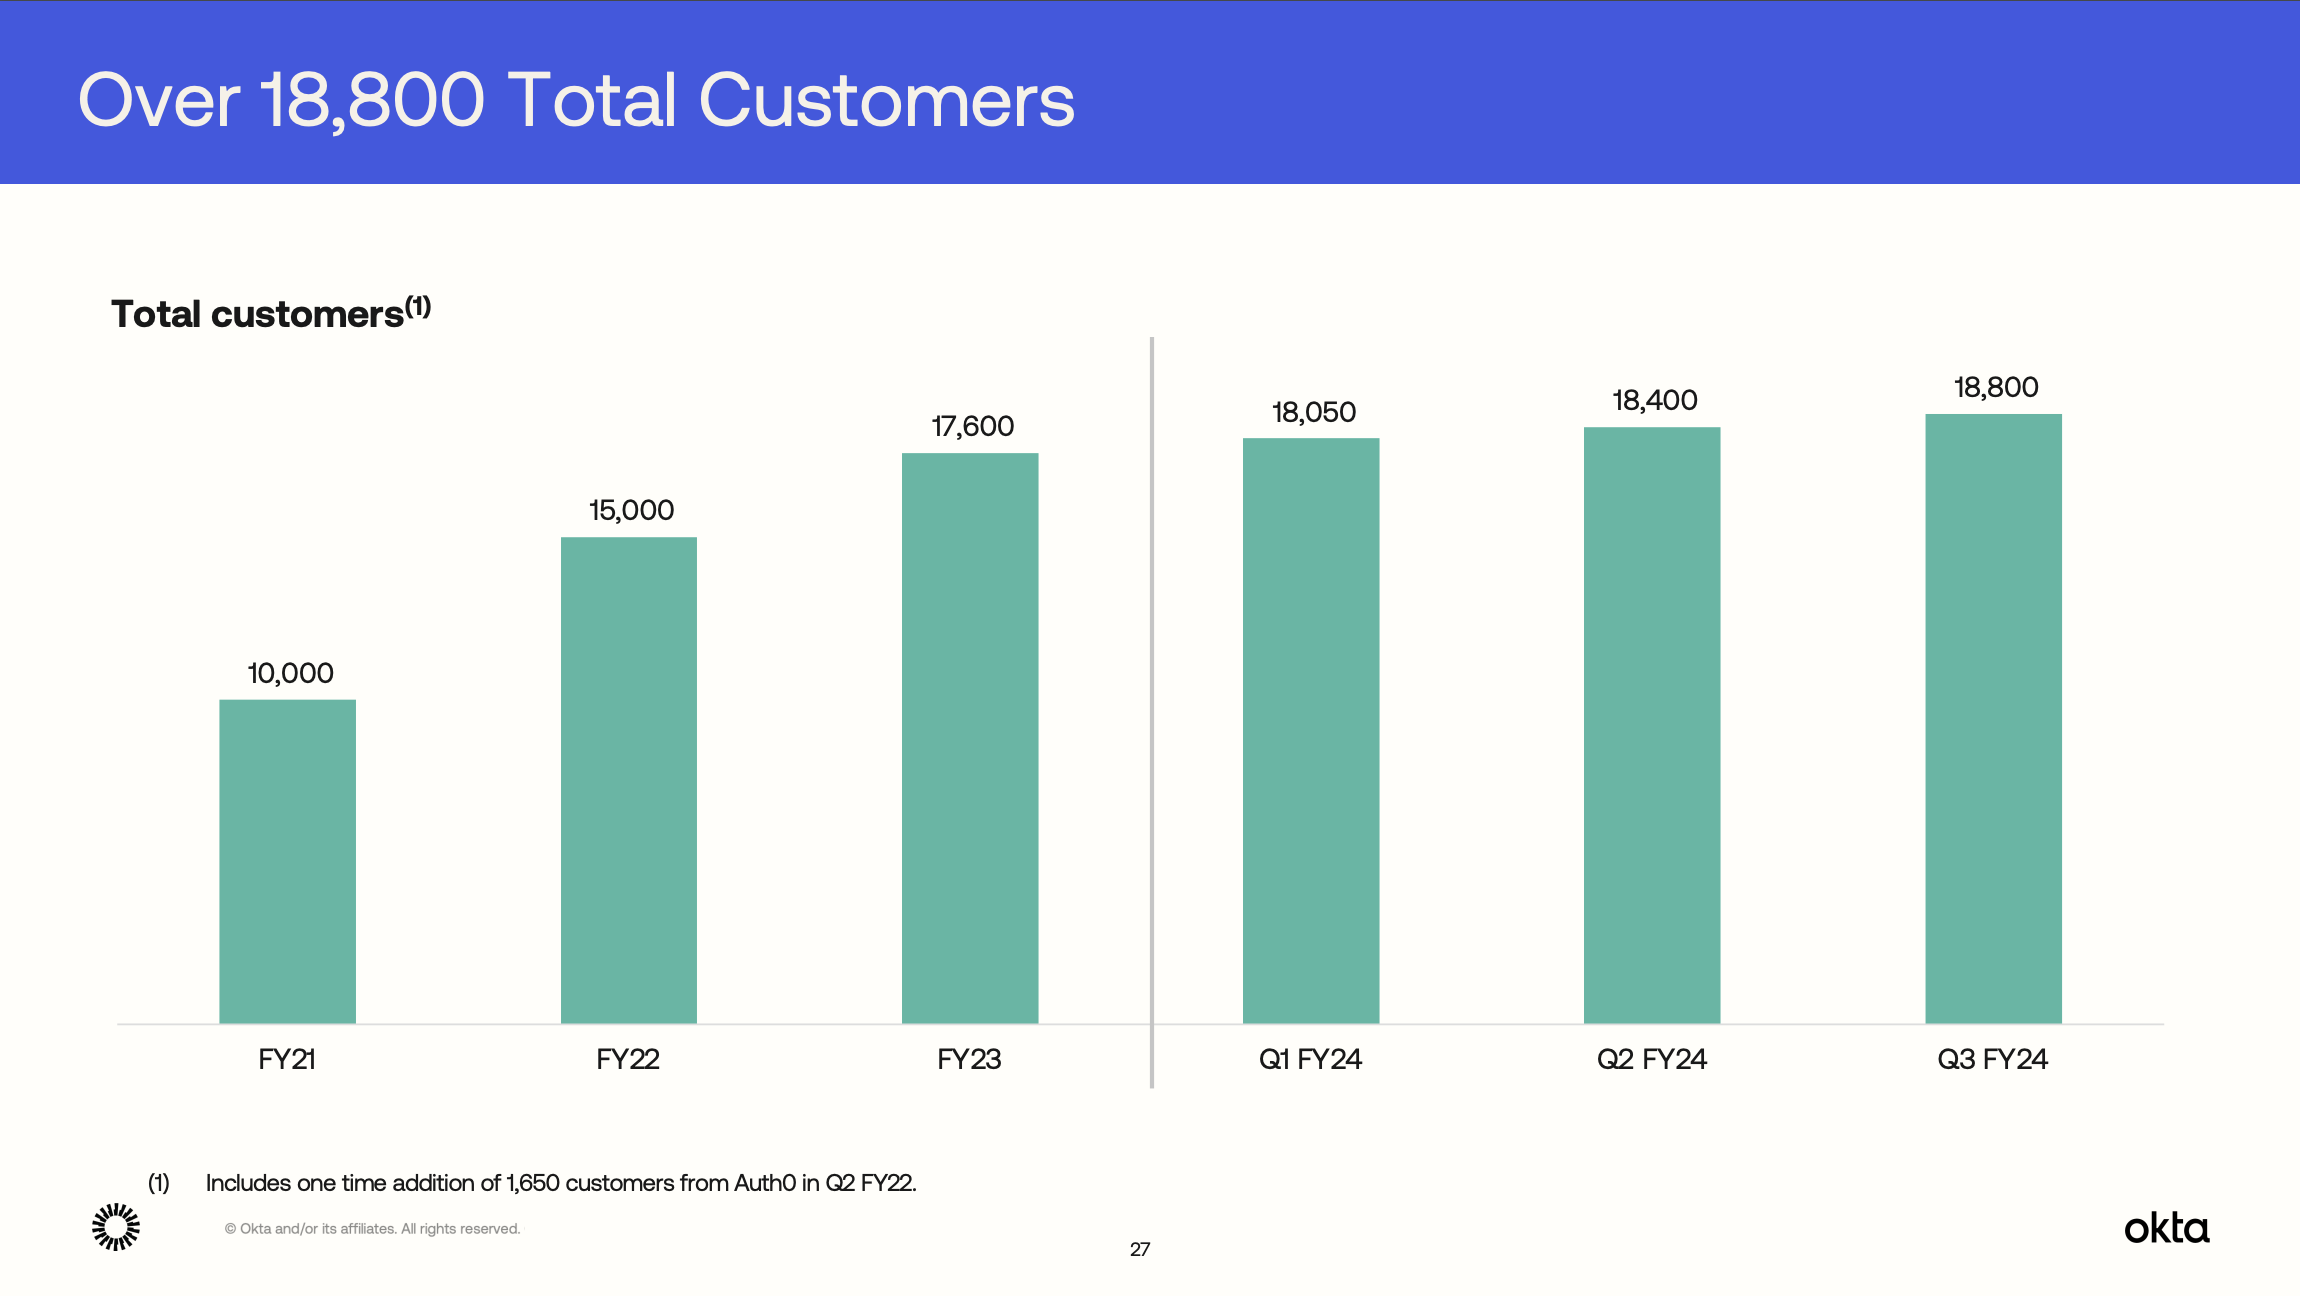 Increasing trend of Okta's total customer growth